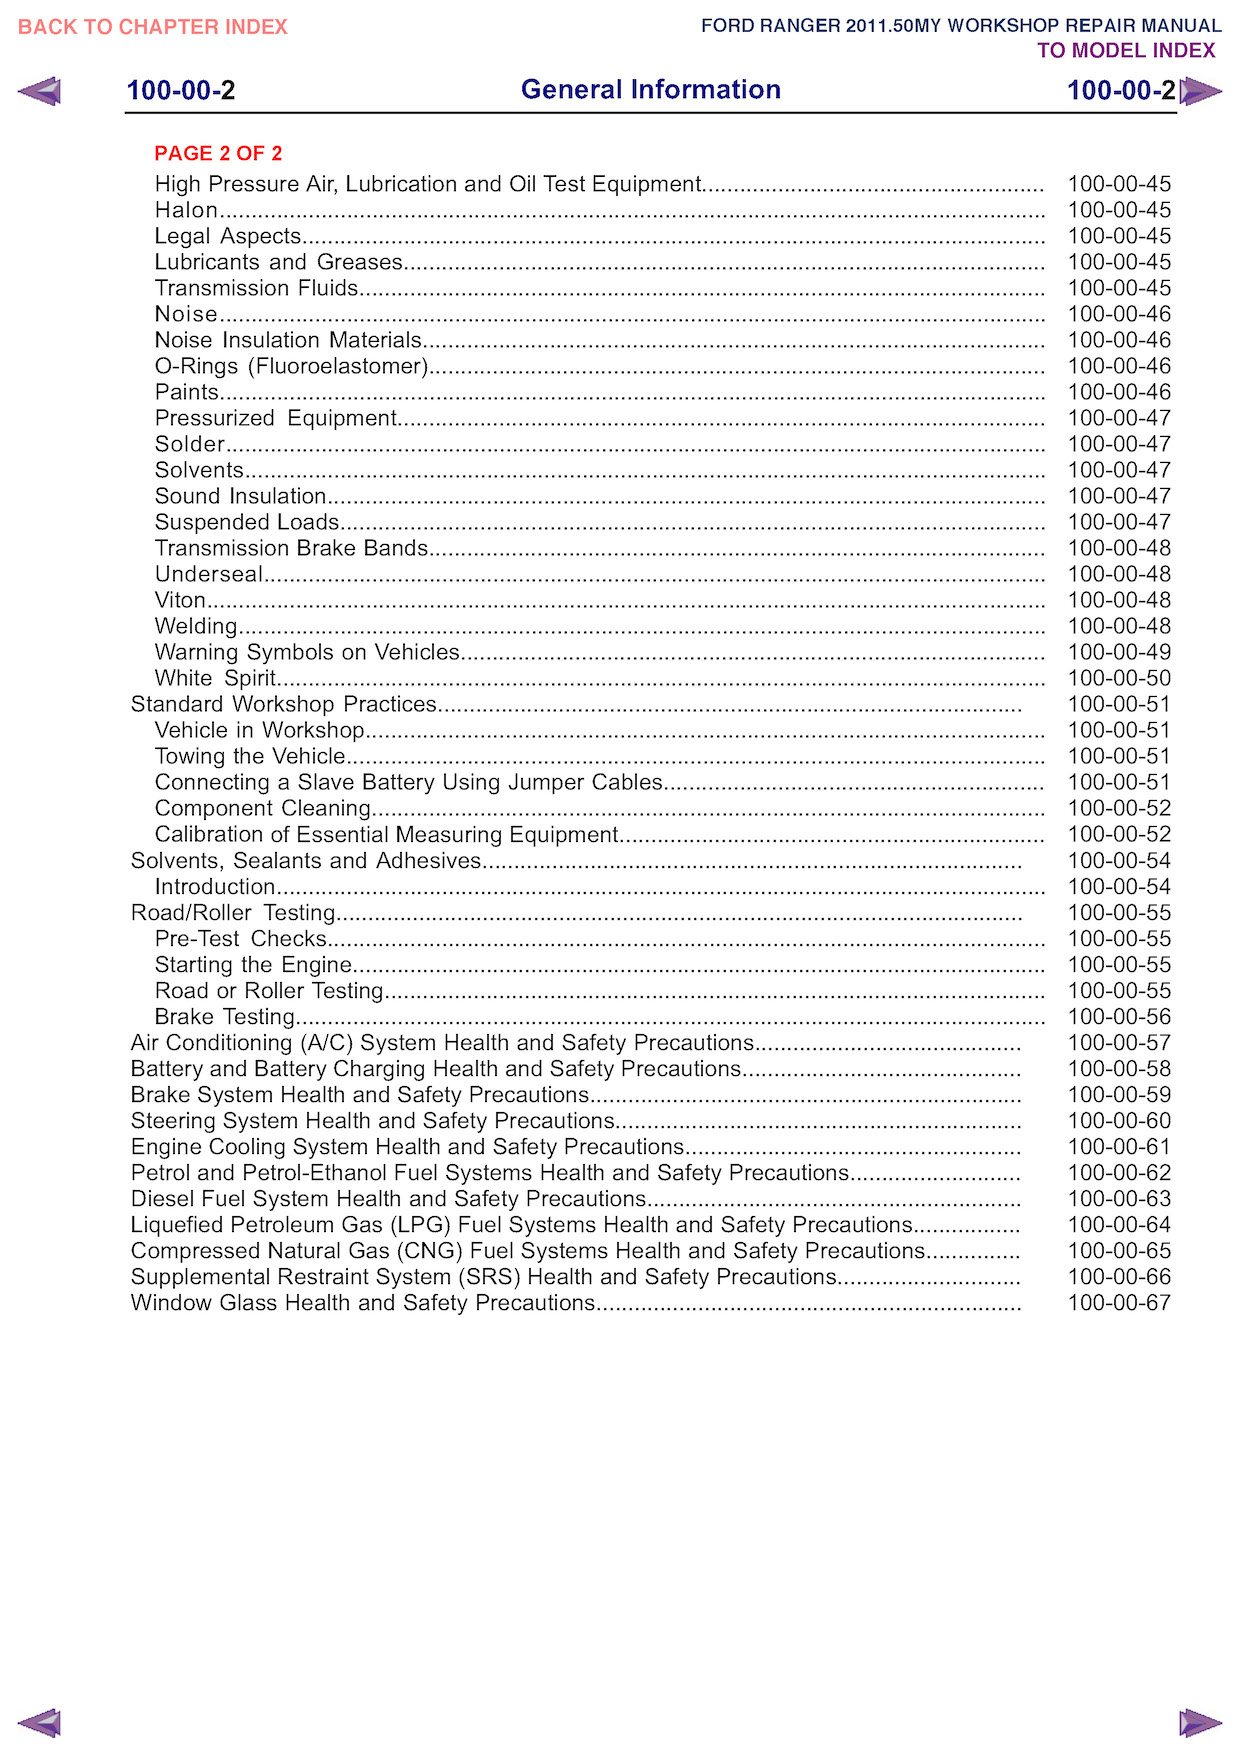 Contents 2011 Ford Ranger Repair Manual General Information